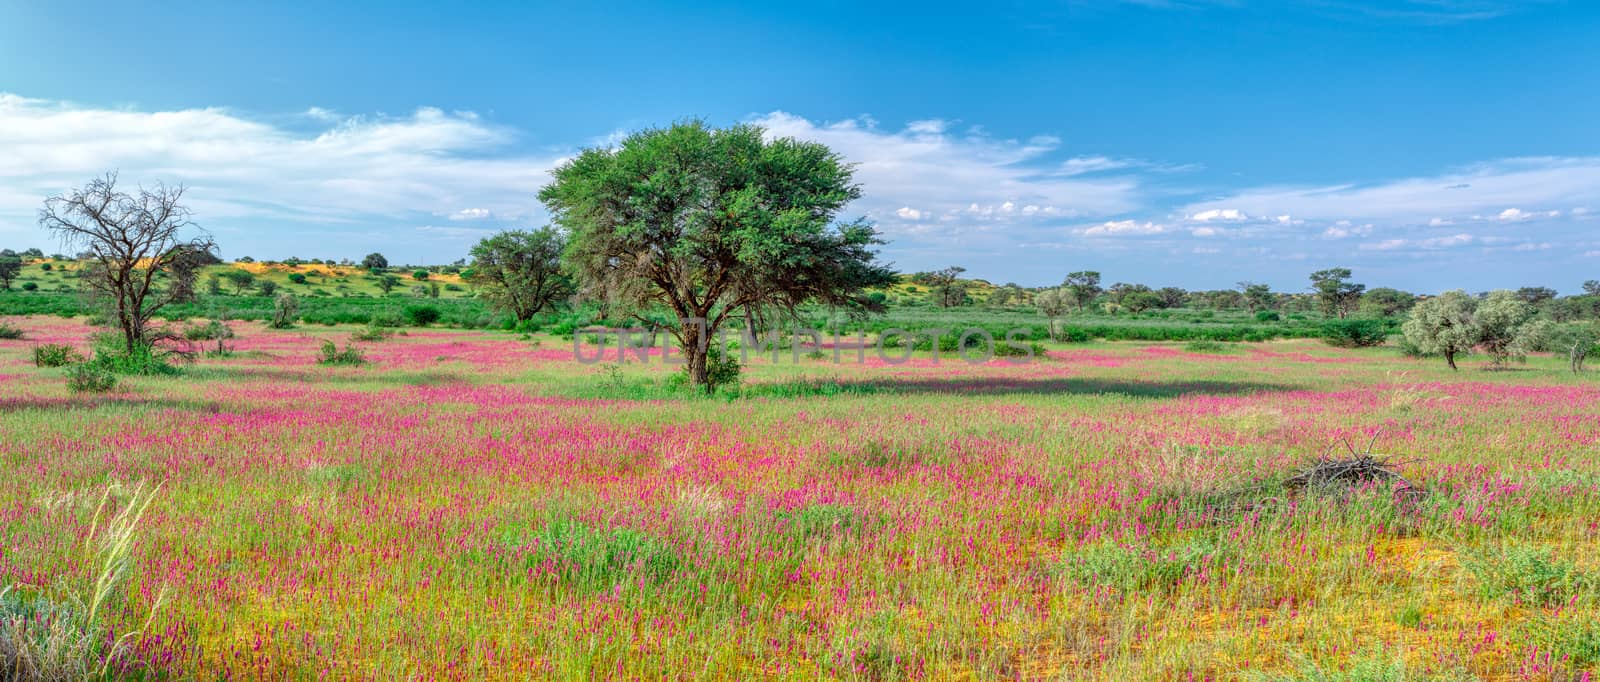 Violet flowering Kalahari desert after rain season, South Africa wilderness